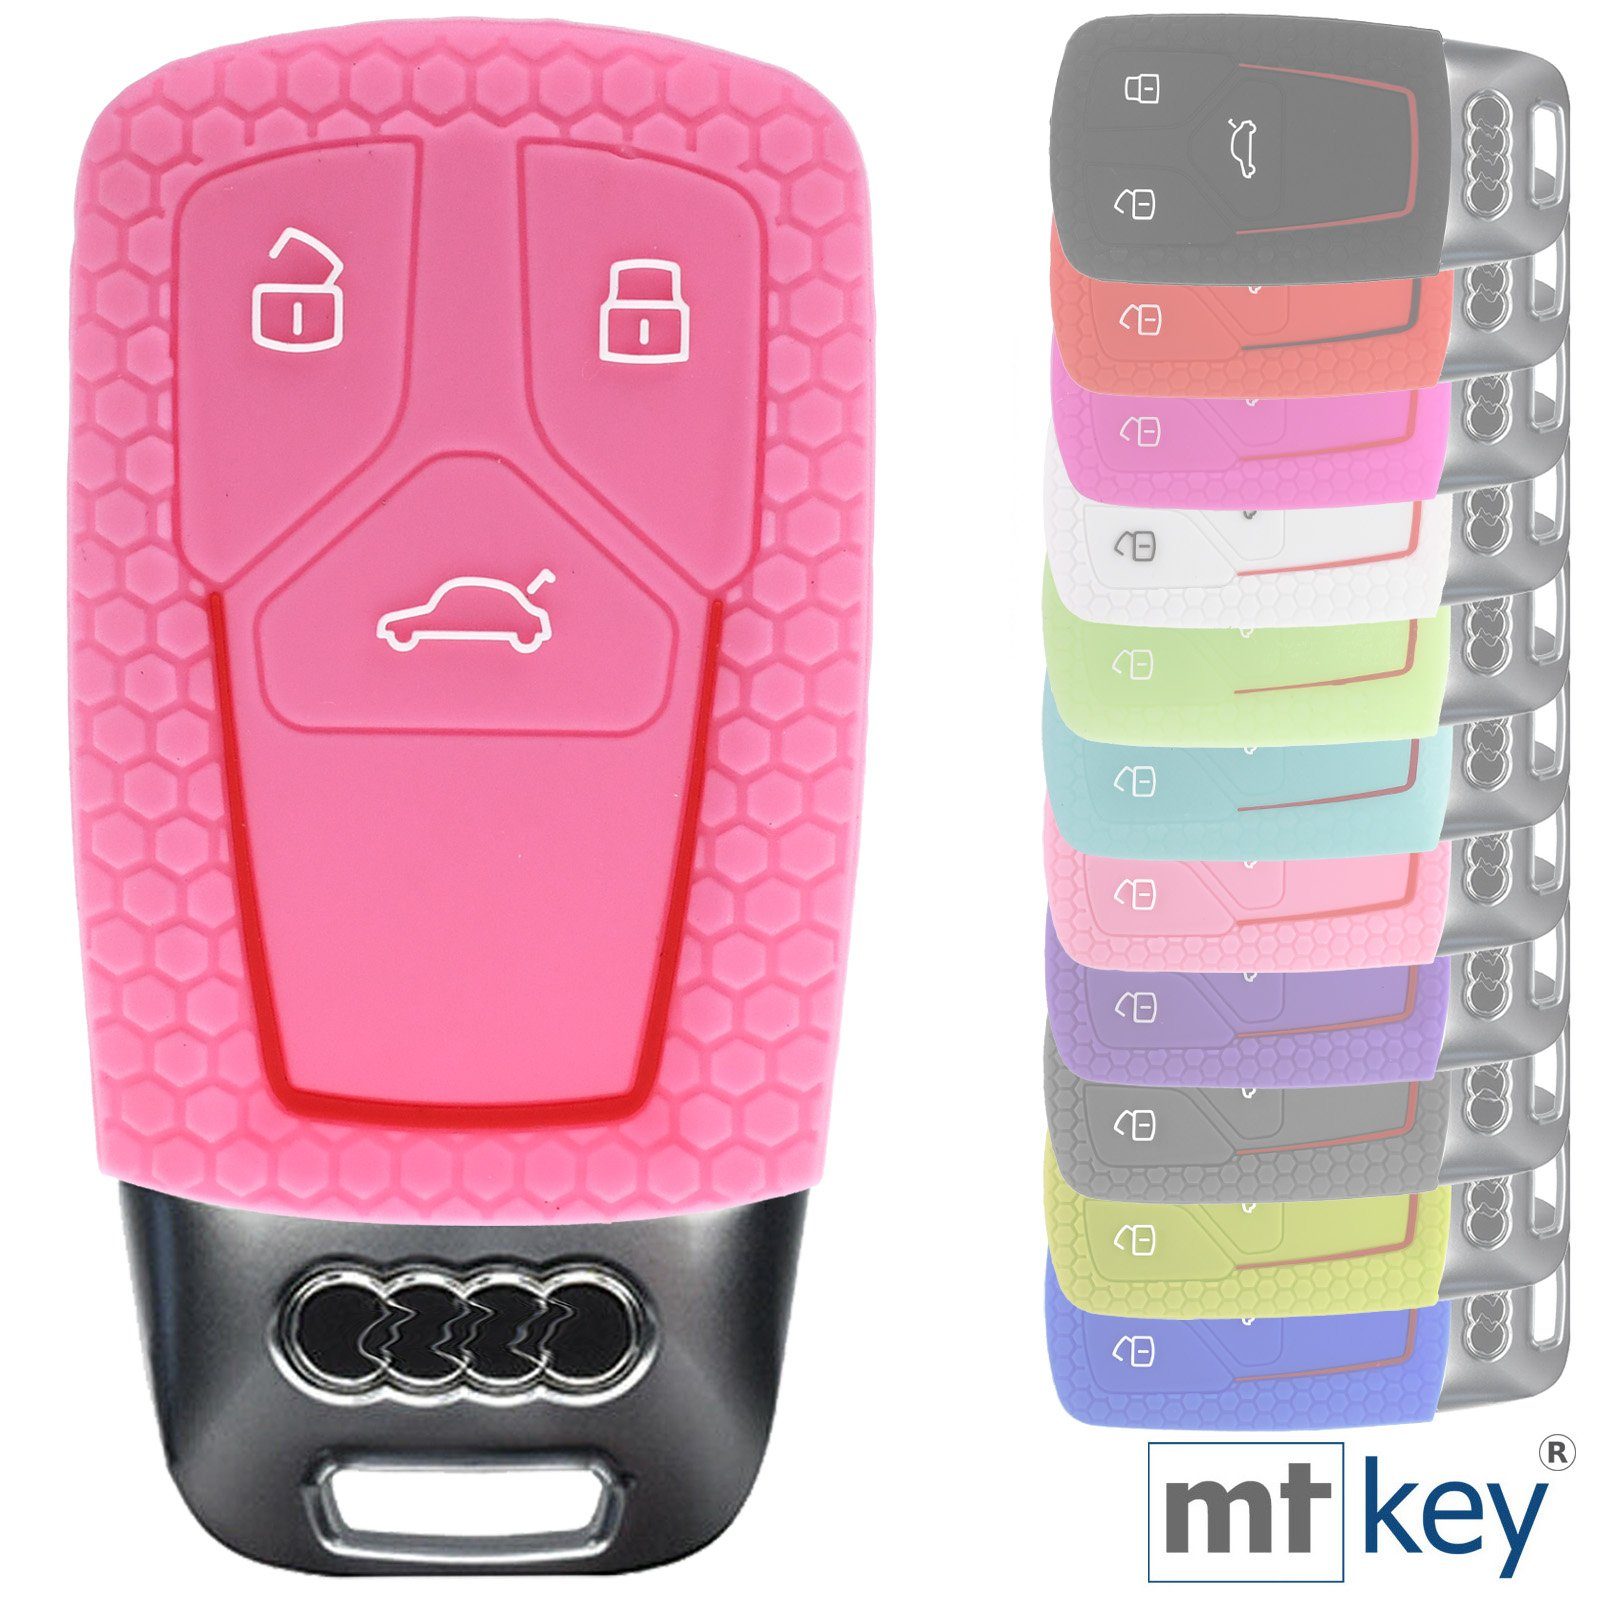 mt-key Schlüsseltasche Autoschlüssel Softcase Silikon Schutzhülle im Wabe Design Rosa, für Audi A4 A5 A6 A7 TT Q2 Q5 Q7 A8 Q8 3 Tasten KEYLESS SMARTKEY